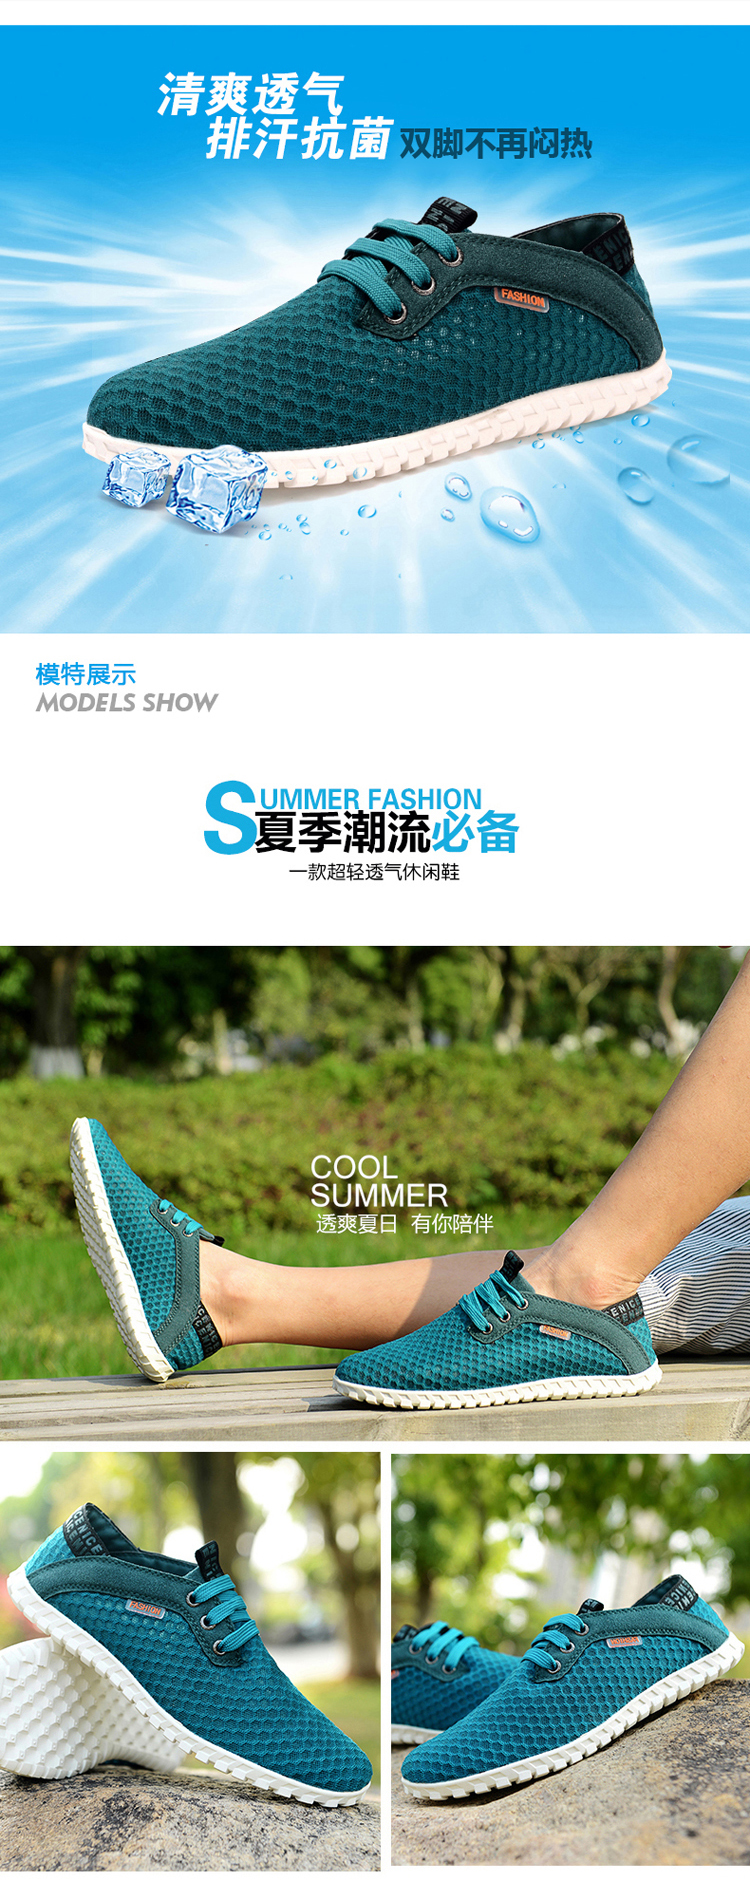 LINGWUZHE领舞者夏季新款休闲鞋低帮男鞋 潮流时尚透气网鞋韩版网布鞋板鞋